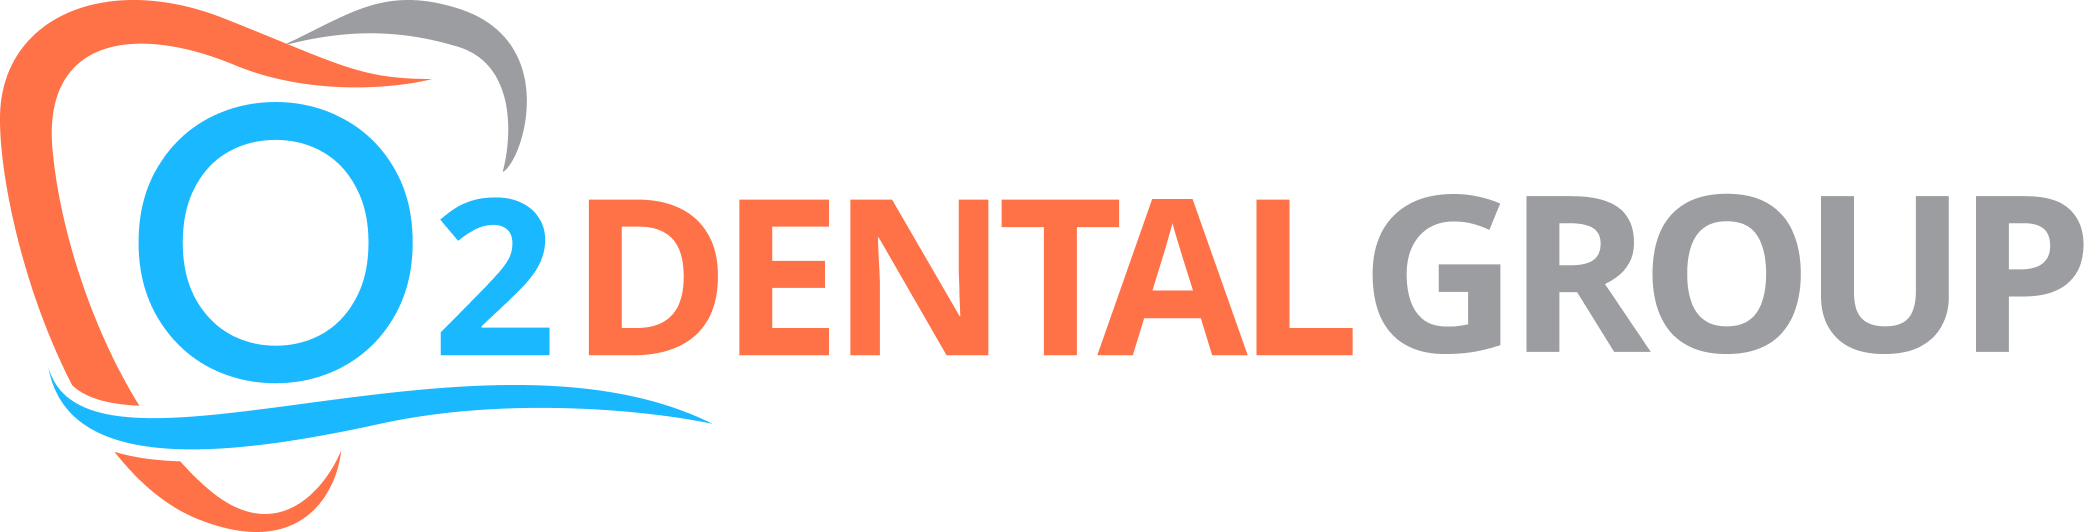 O2 Dental Group of Fayetteville - logo